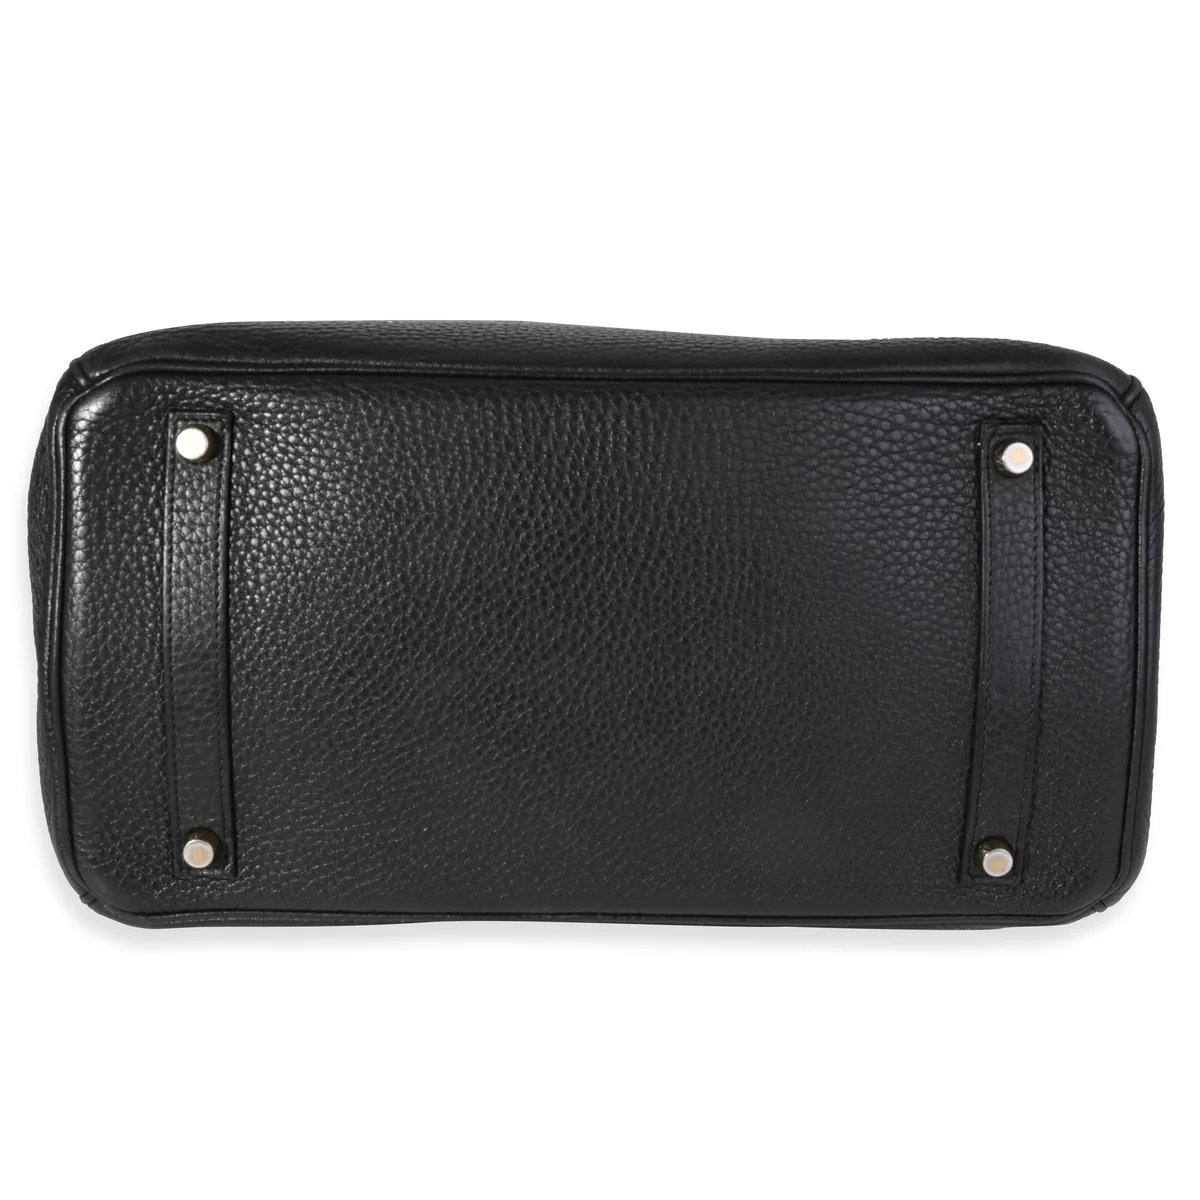 Hermes Birkin Black 35 Togo Leather w/Original Box and Invoice